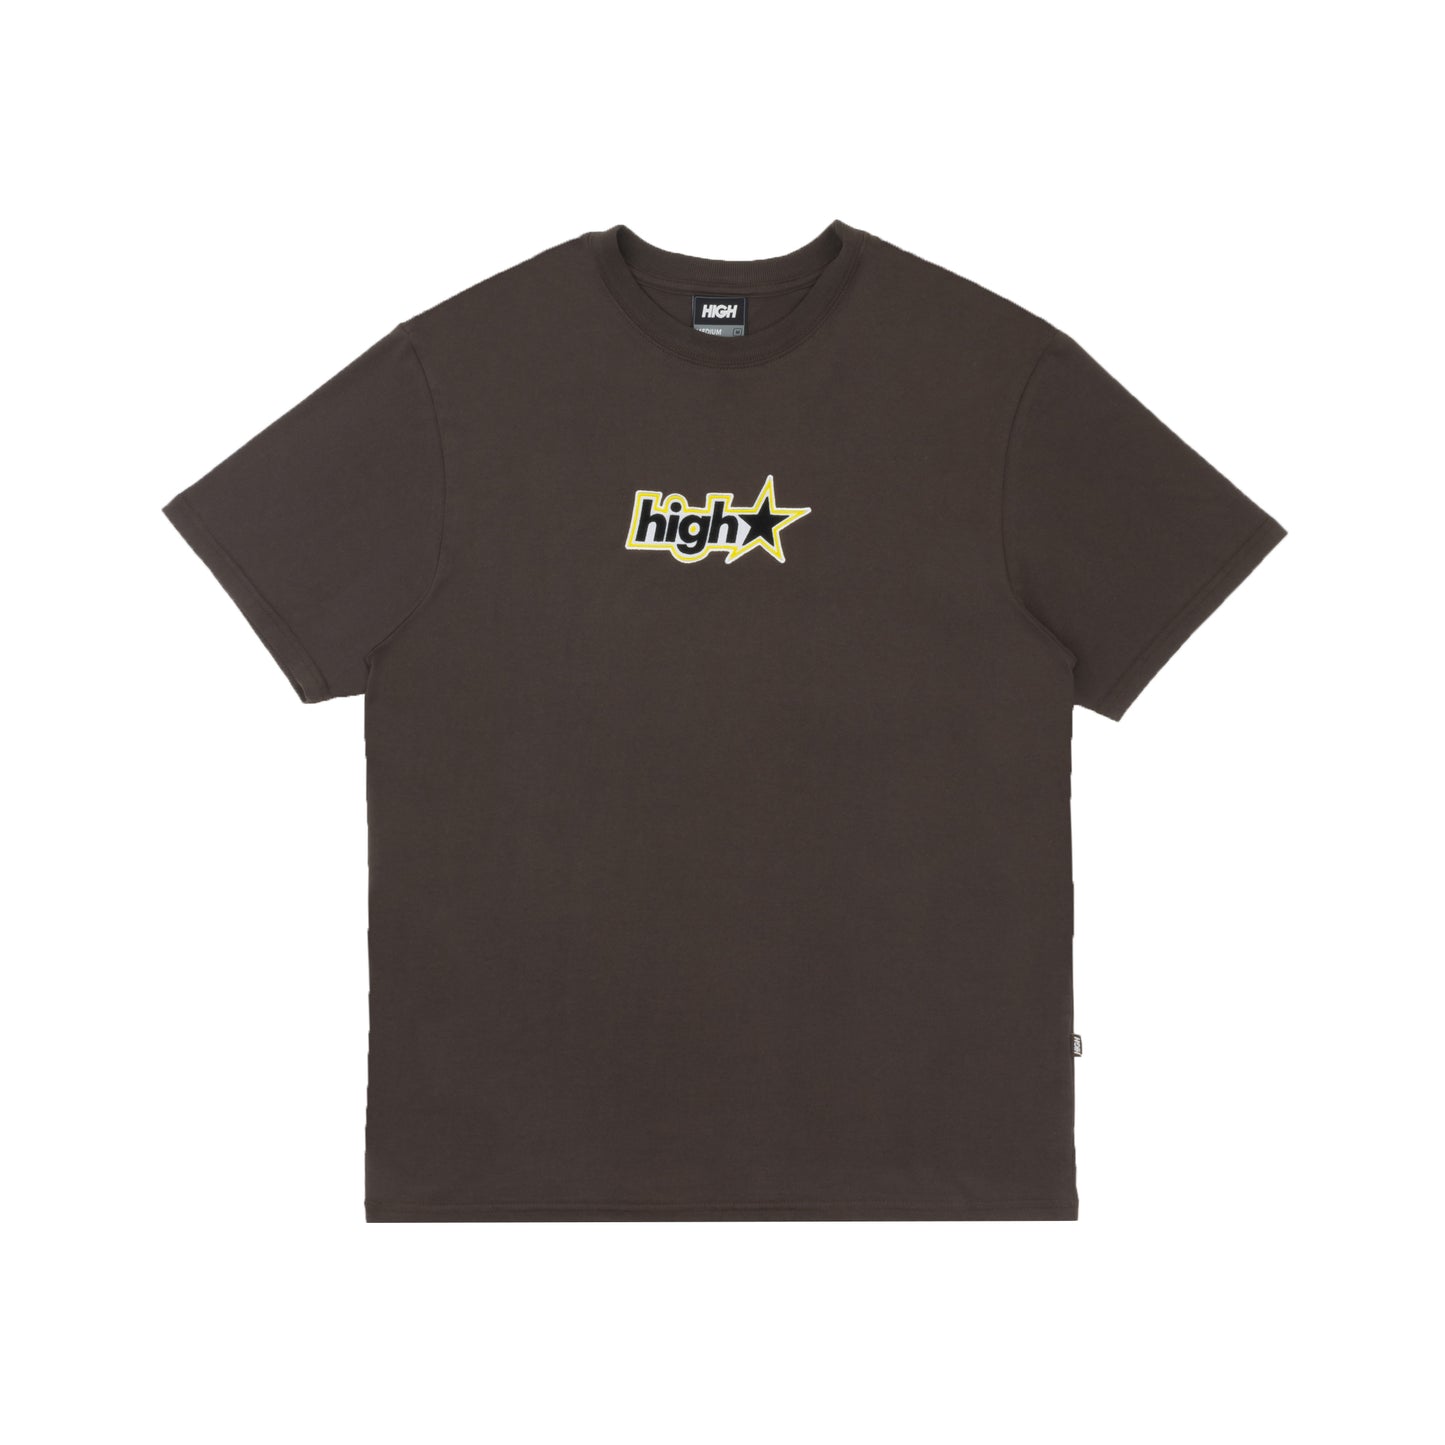 HIGH - Camiseta Highstar "Brown" - THE GAME